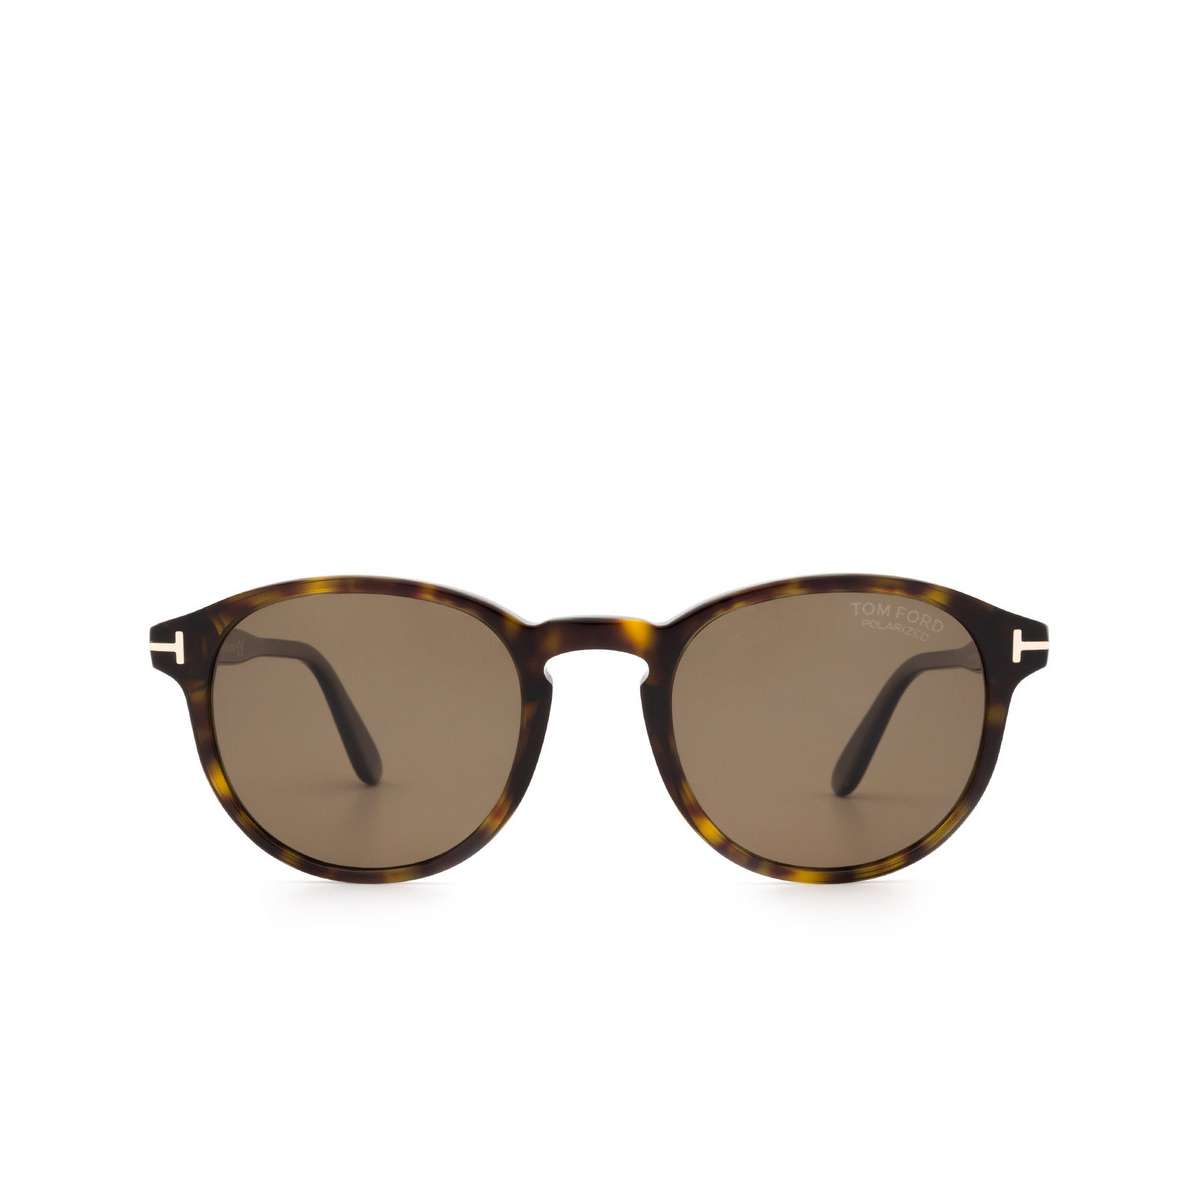 Tom Ford DANTE Sunglasses 52M Dark Havana - front view